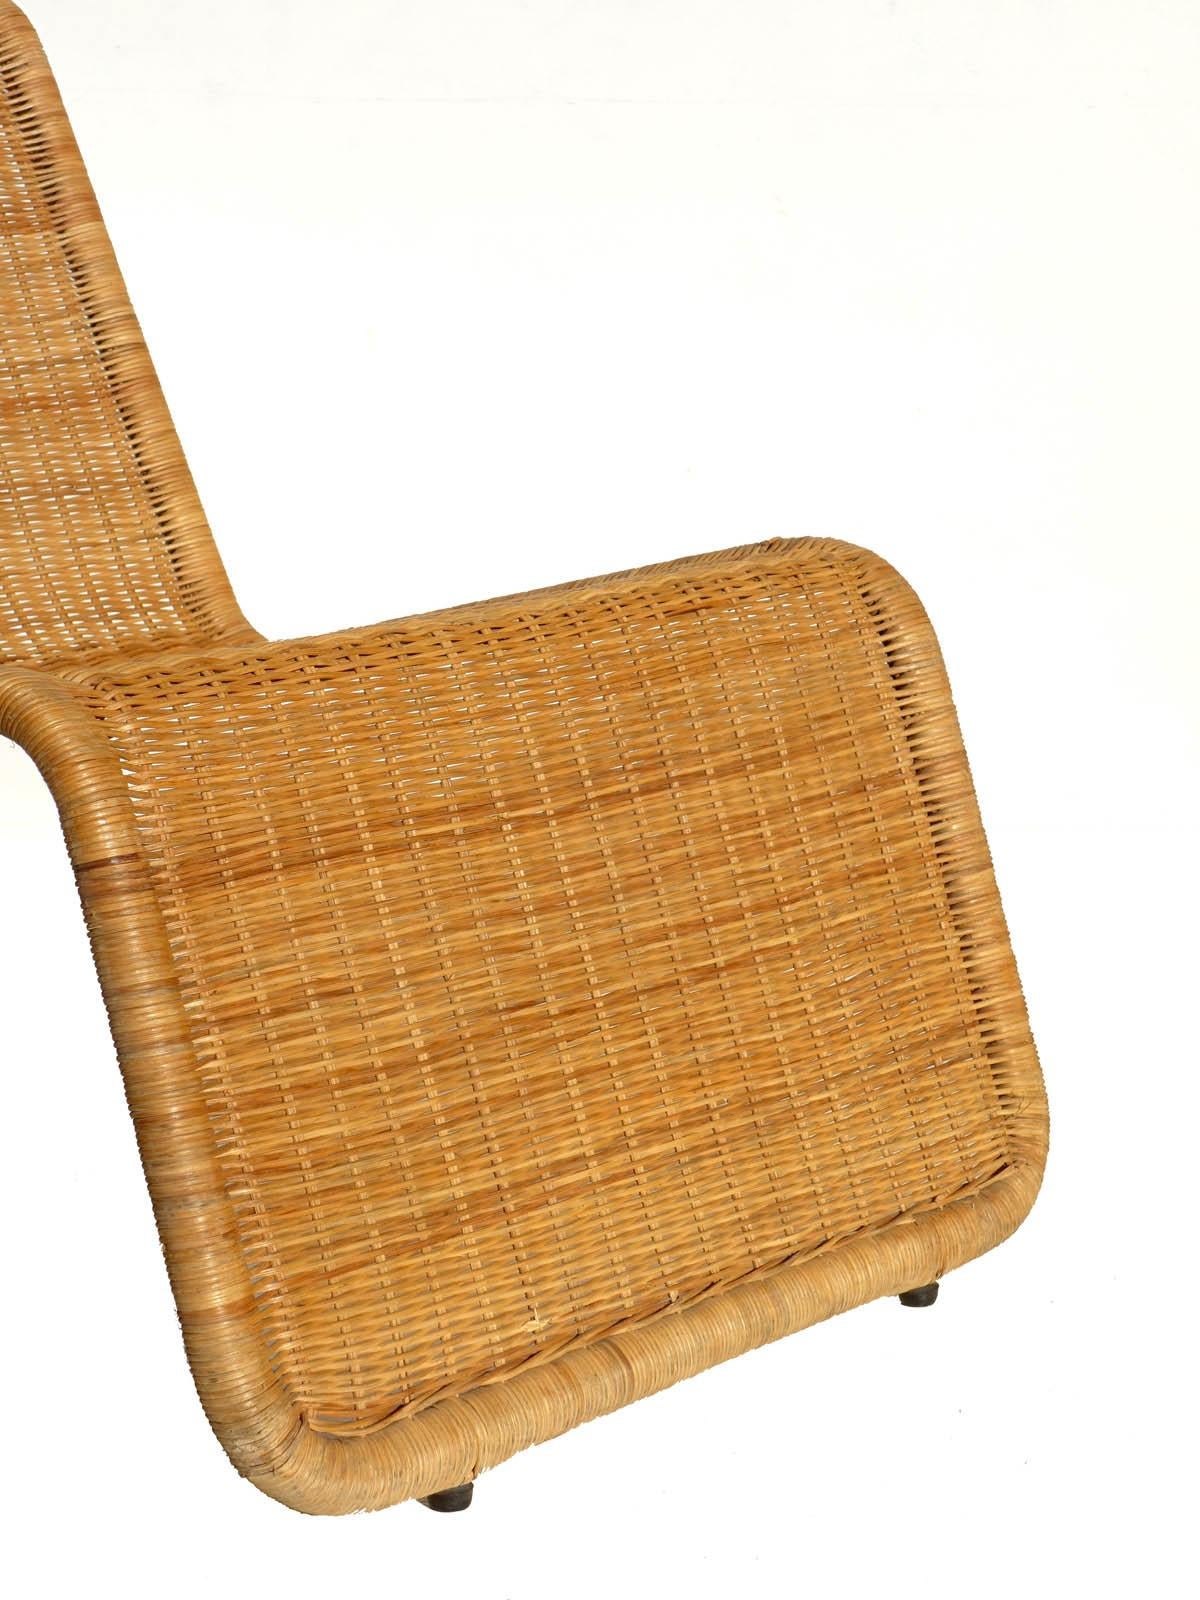 Steel 1950s Wicker Rattan Italian Design Midcentury Armchair Lounge Chair, Set of 2